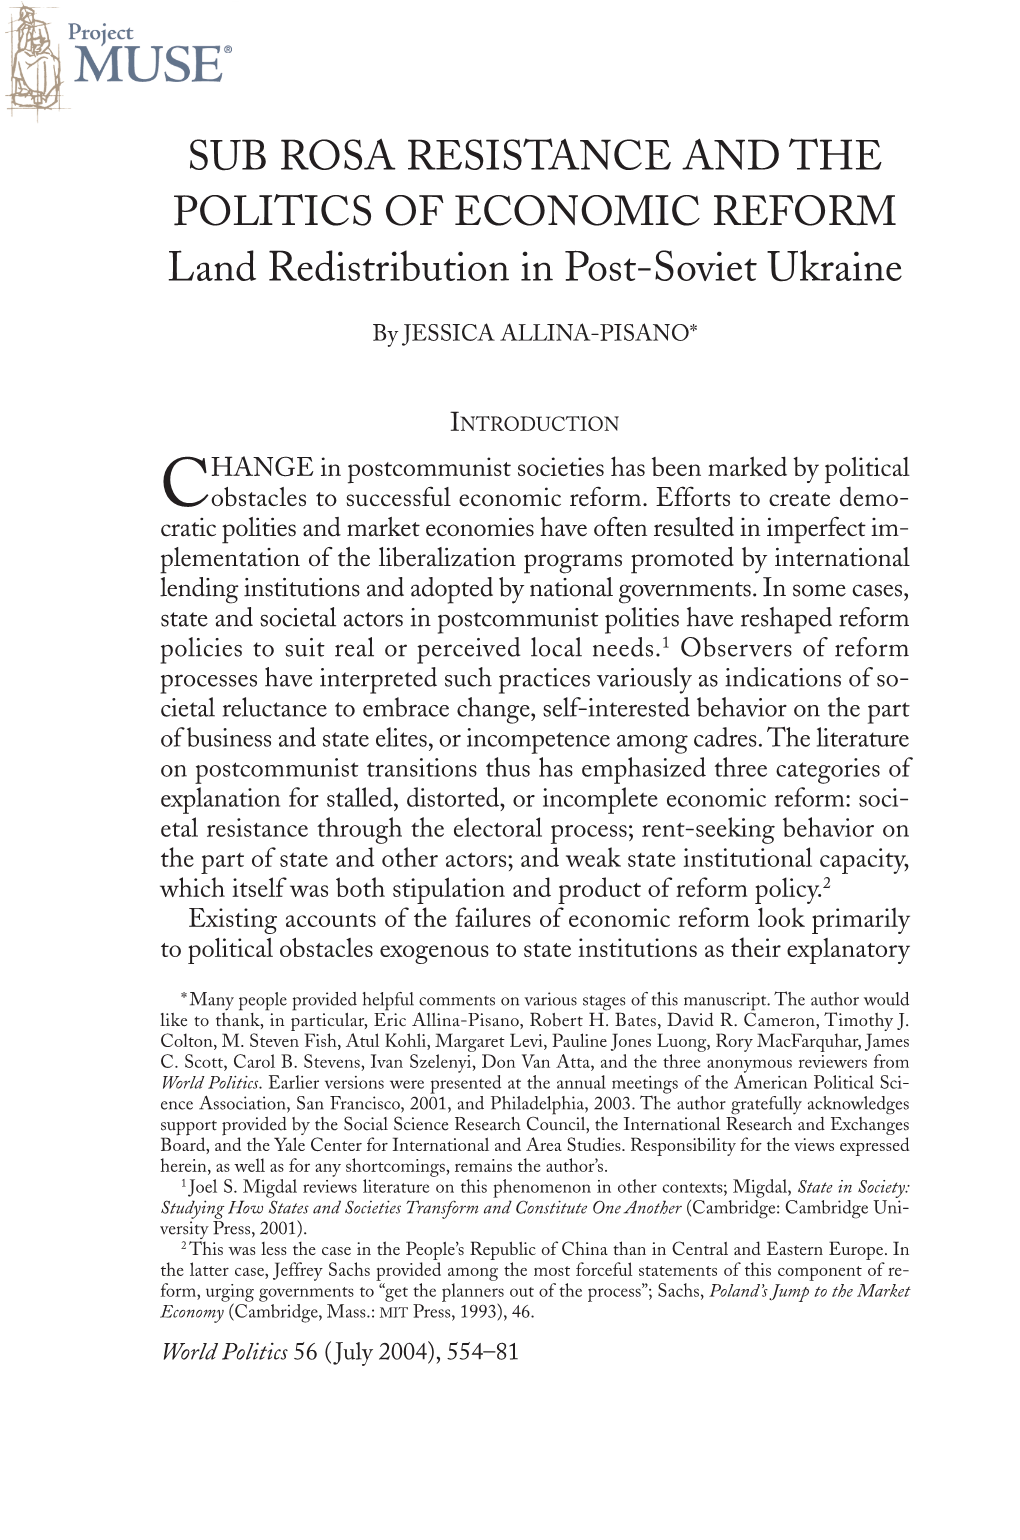 Sub Rosa Resistance and the Politics of Economic Reform: Land